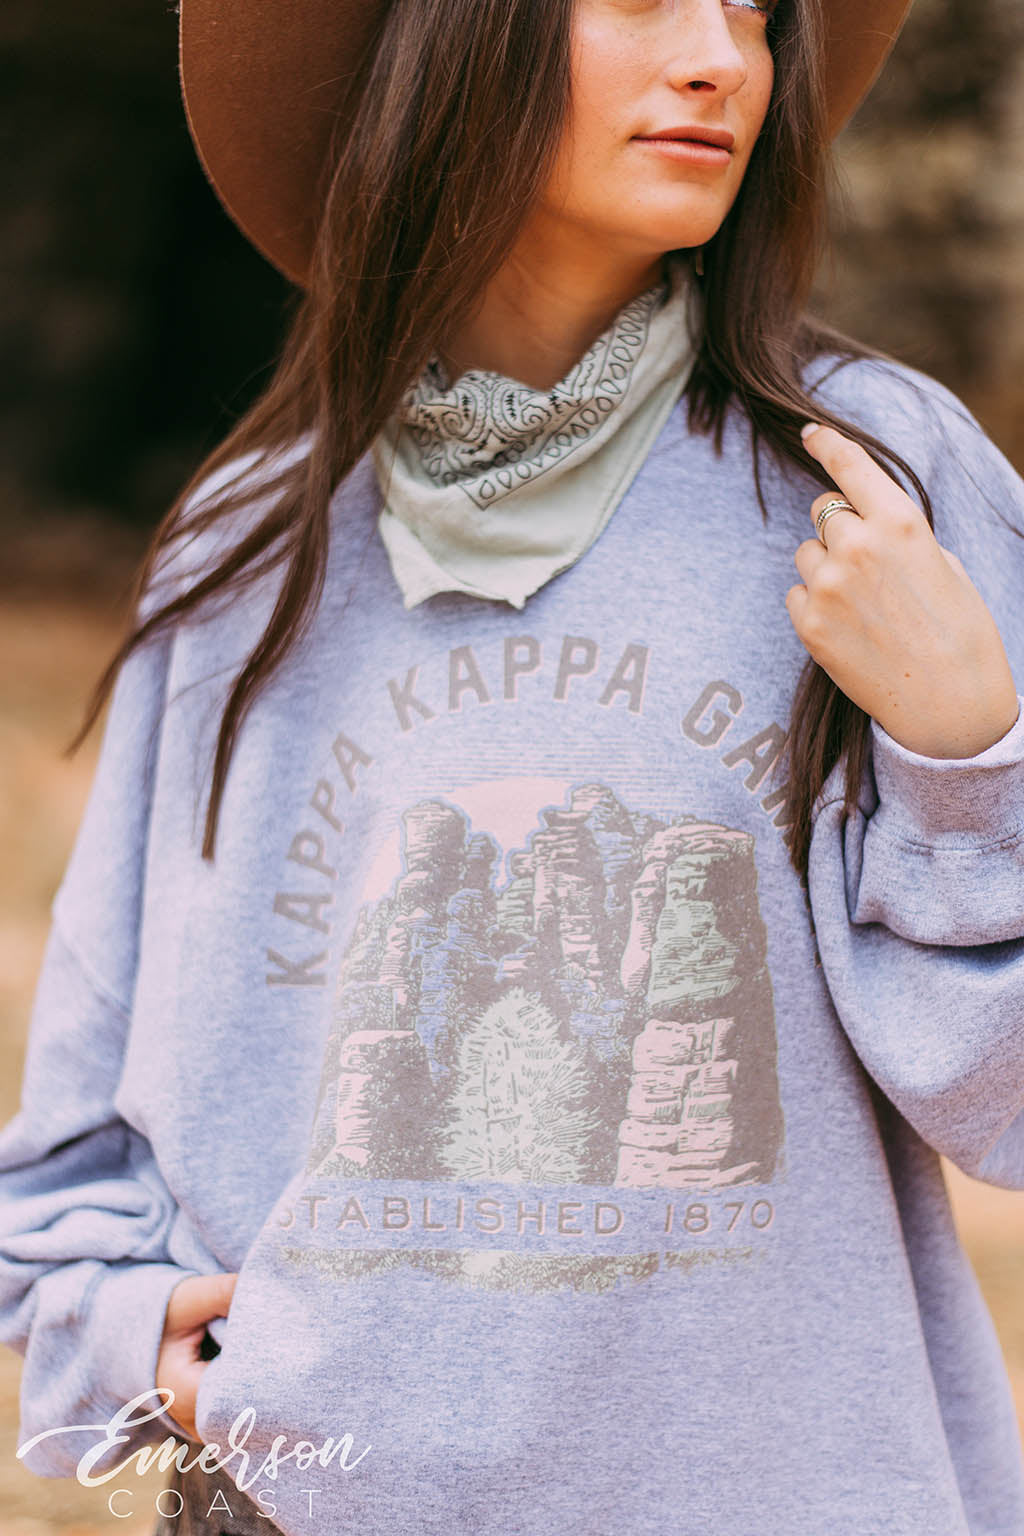 Kappa Kappa Gamma Travel Sweatshirt